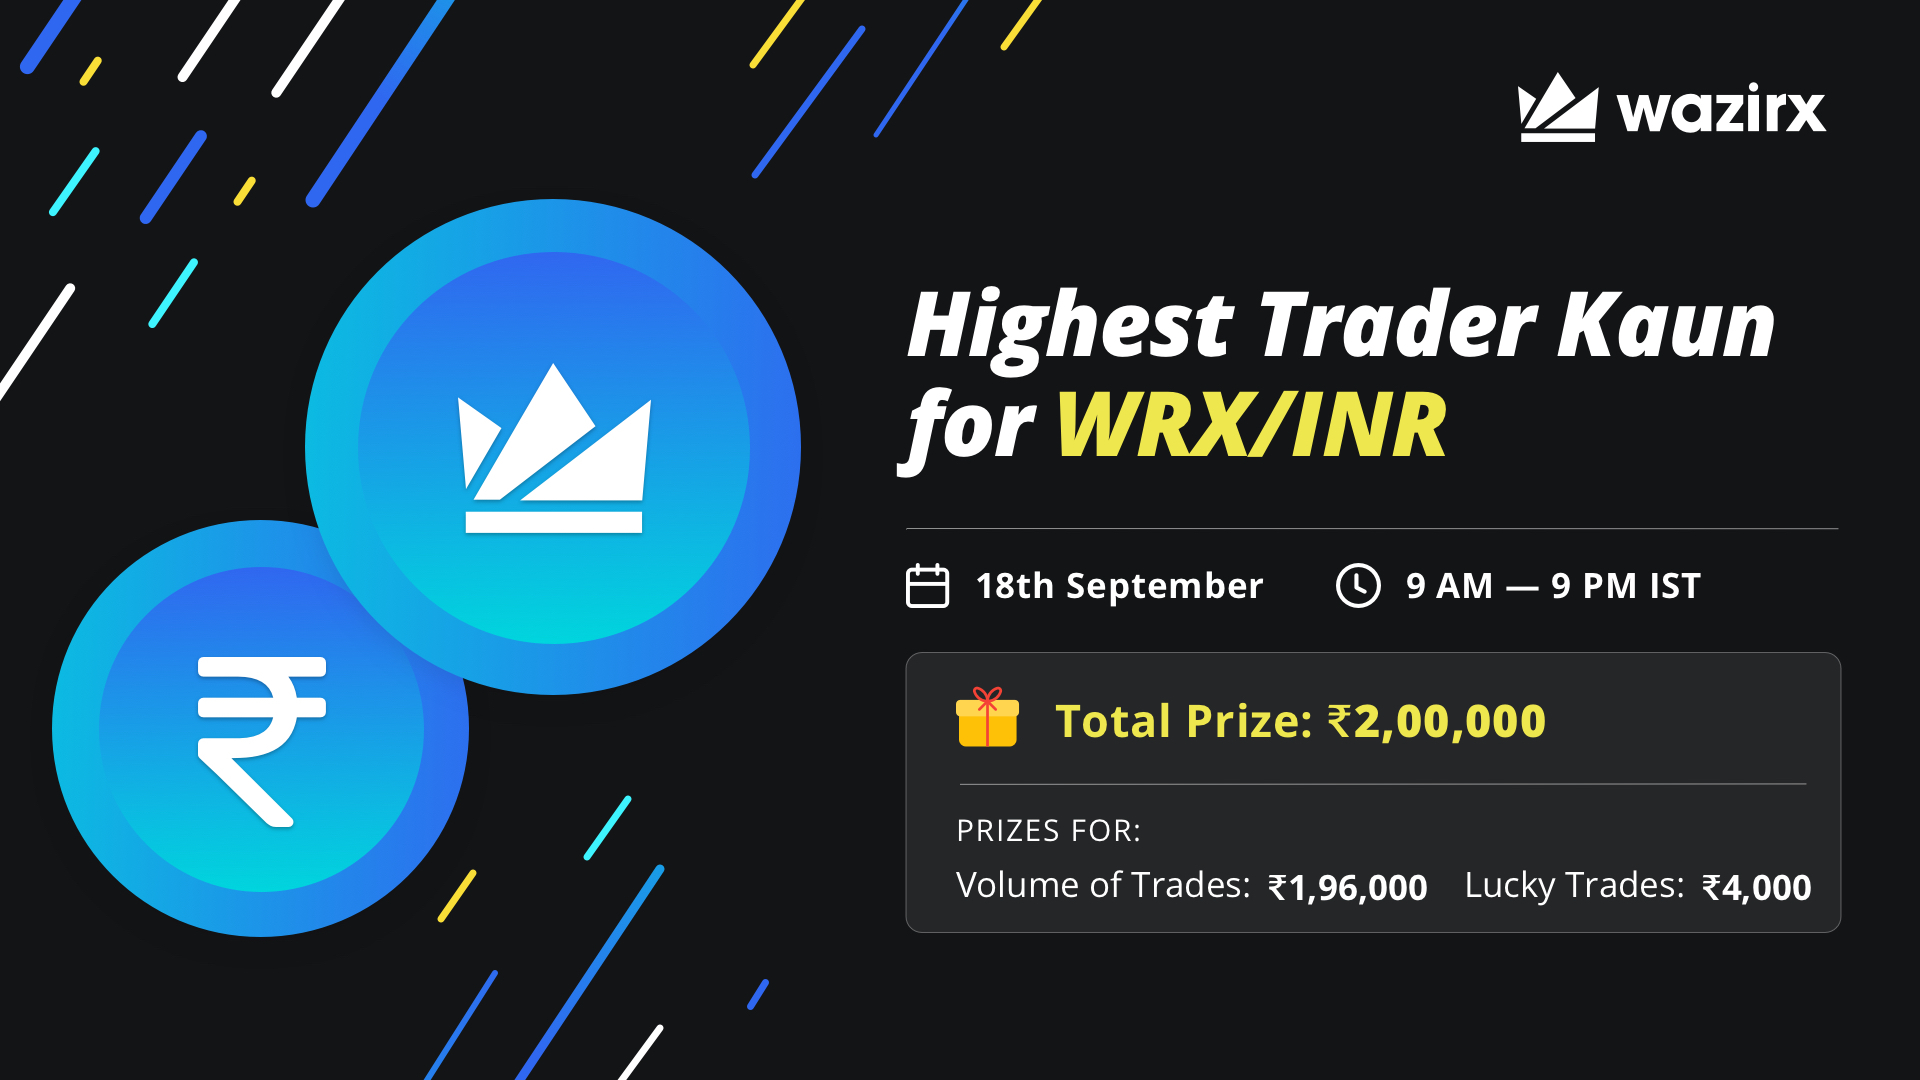 Highest Trader Kaun for WRX/INR